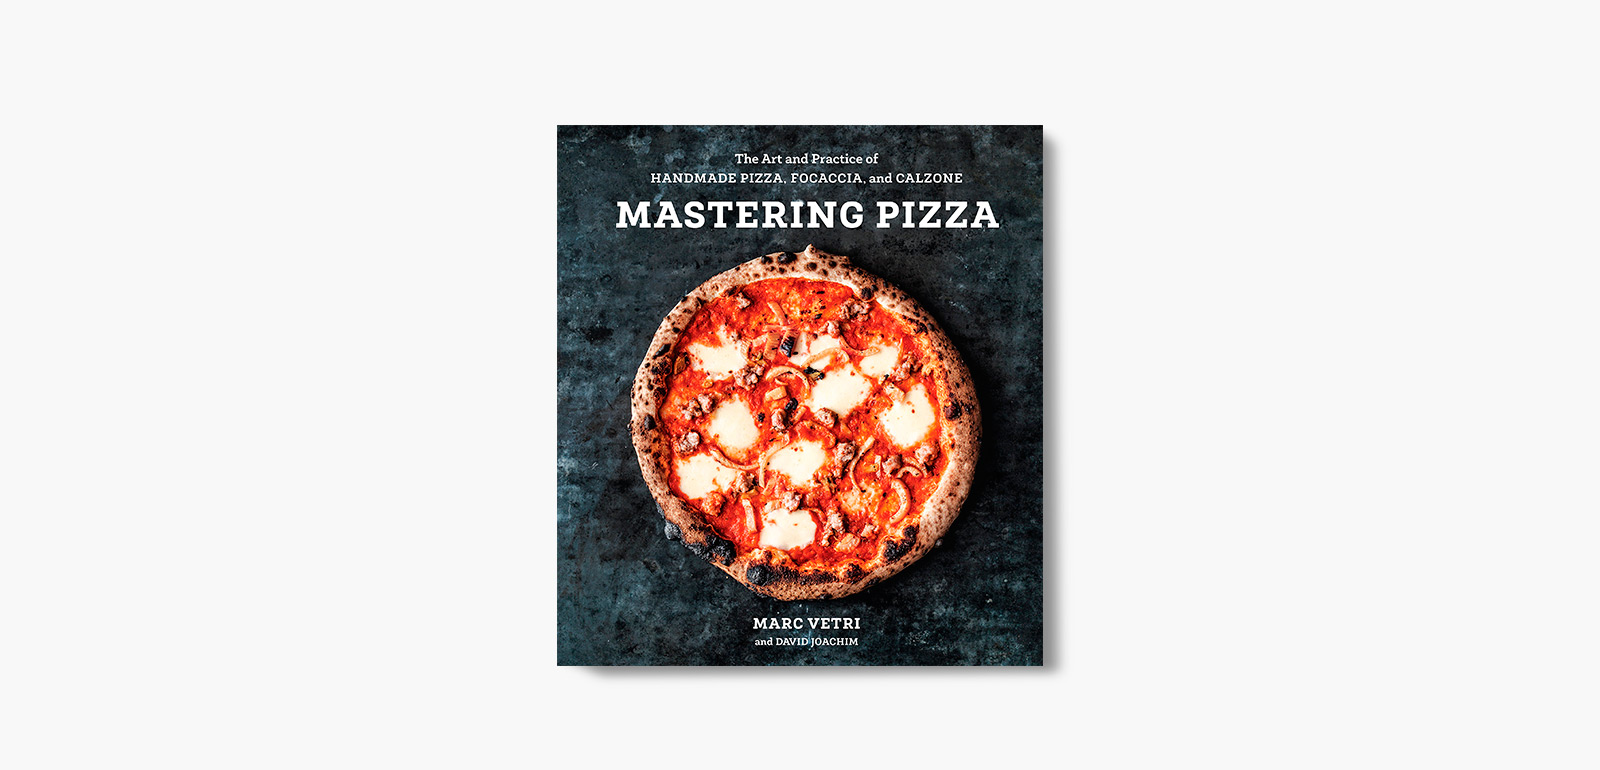 https://imboldn.com/wp-content/uploads/2018/08/Mastering-Pizza-by-Marc-Vetri-David-Joachim-main.jpg